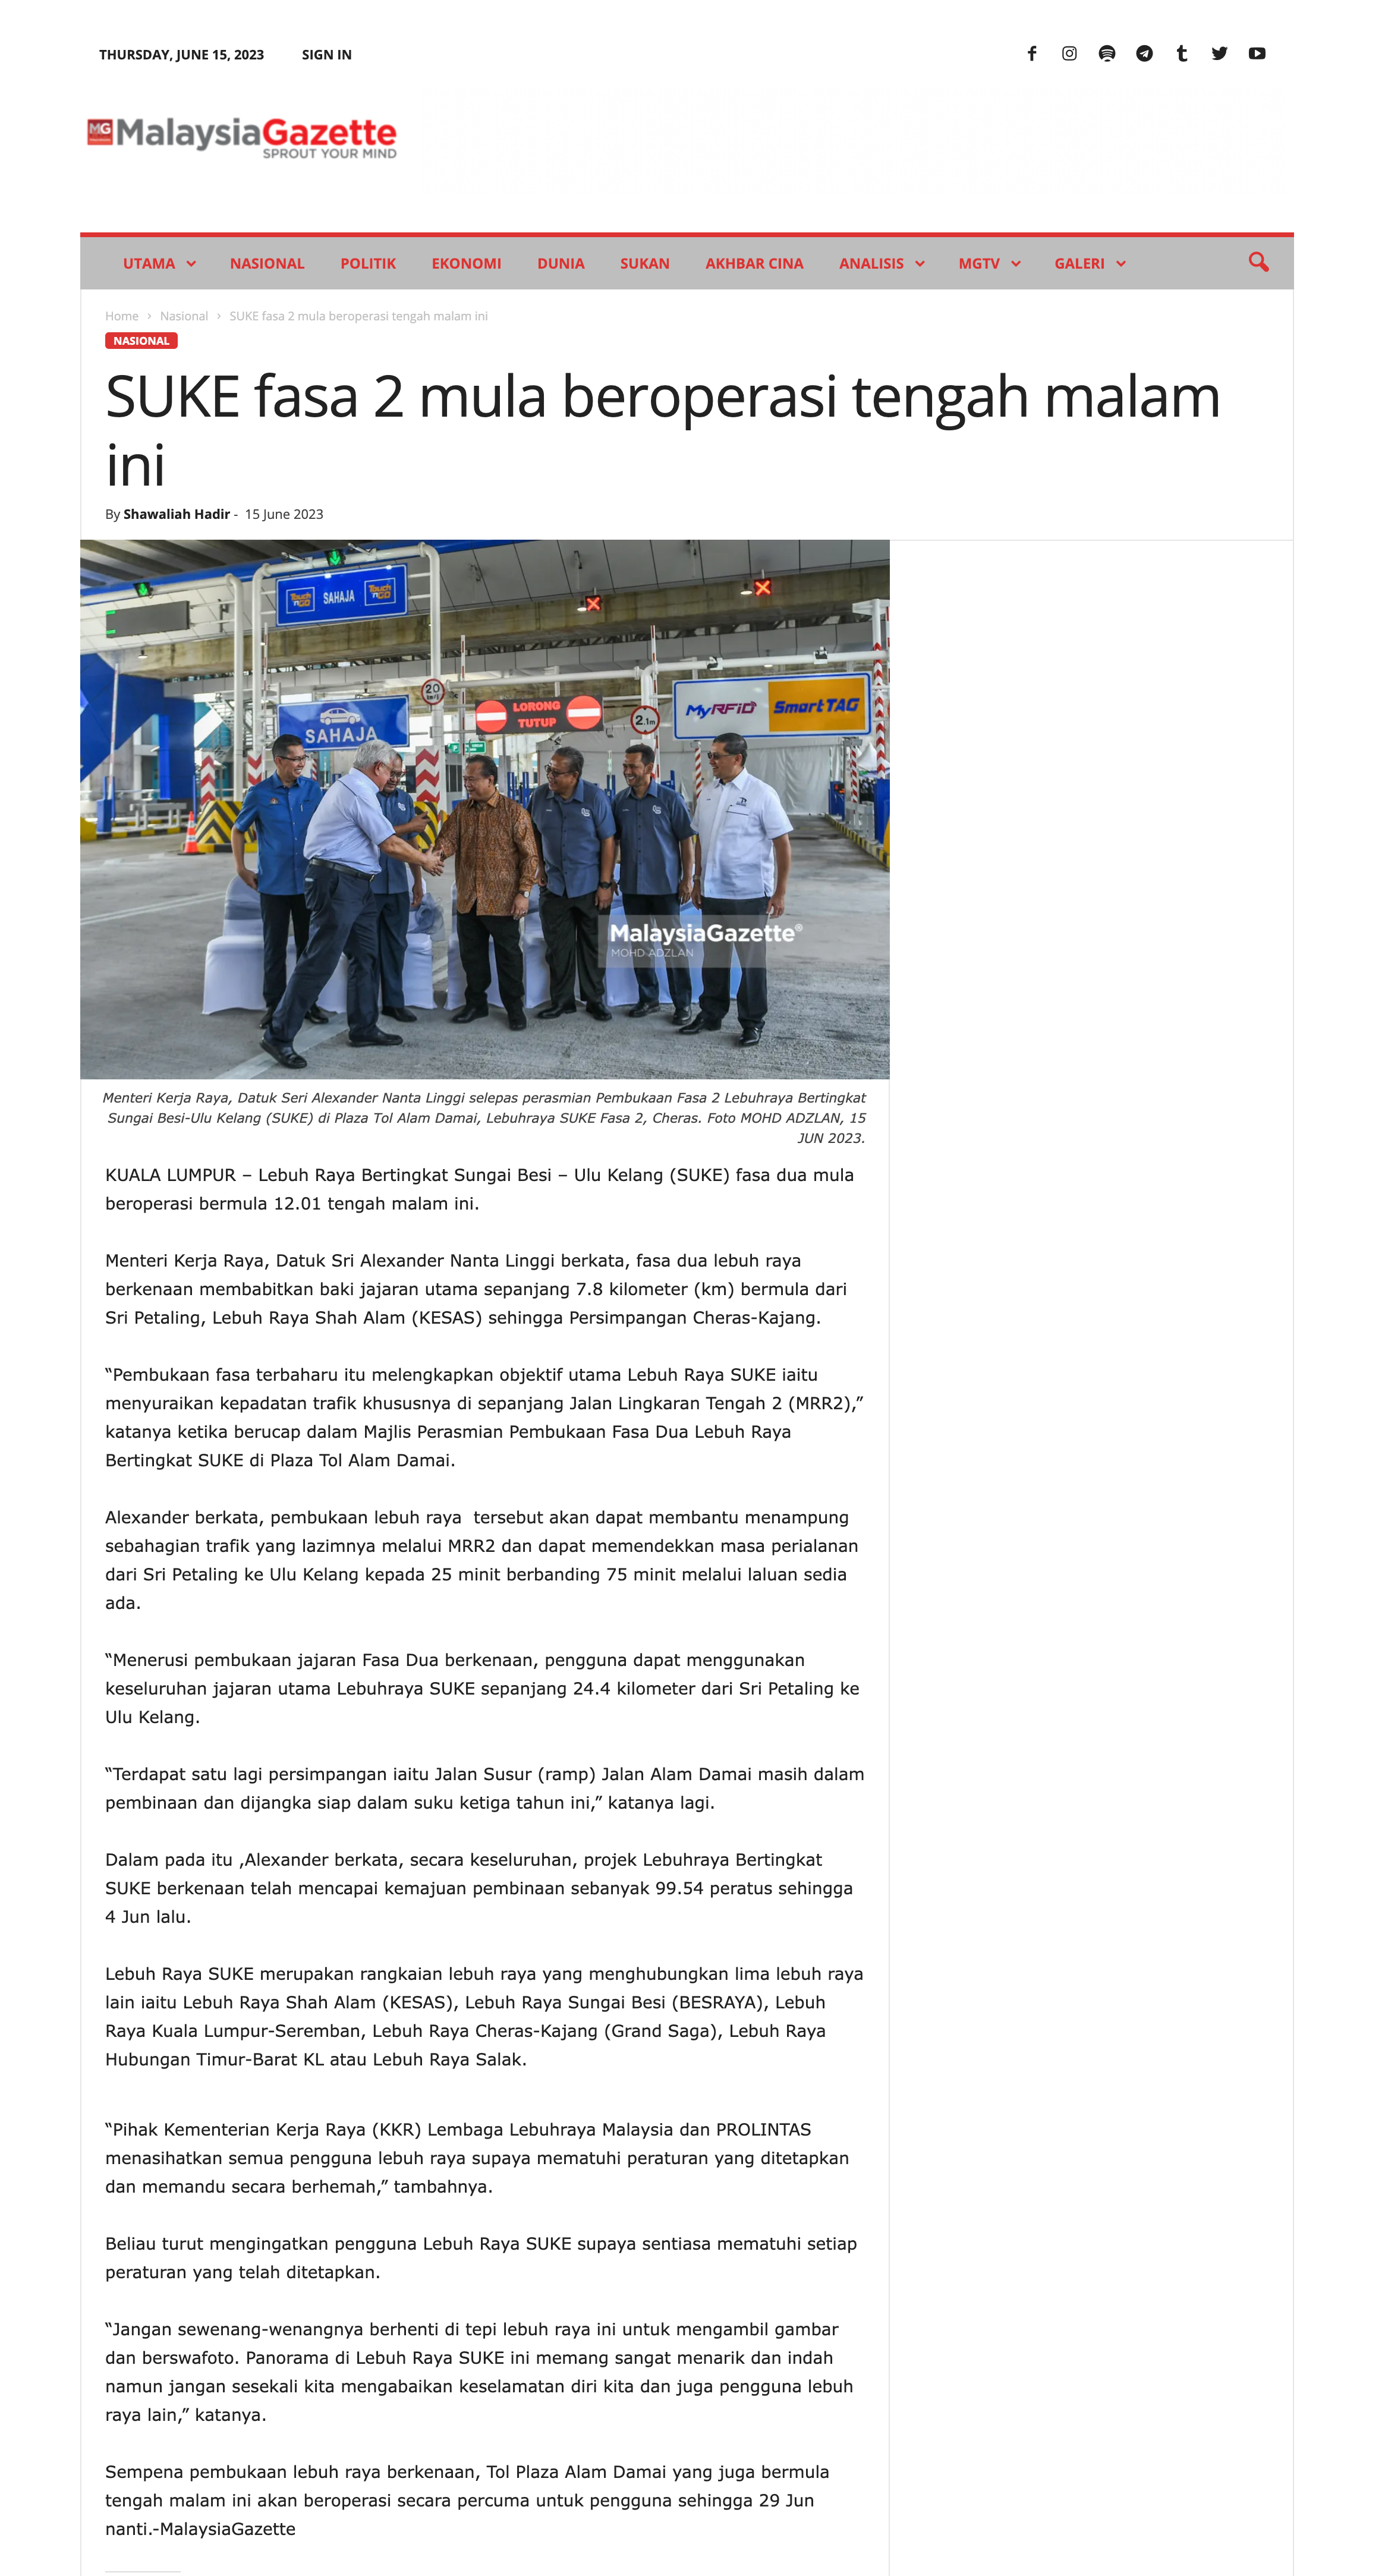 MALAYSIA GAZETTE | SUKE FASA 2 MULA BEROPERASI TENGAH MALAM INI